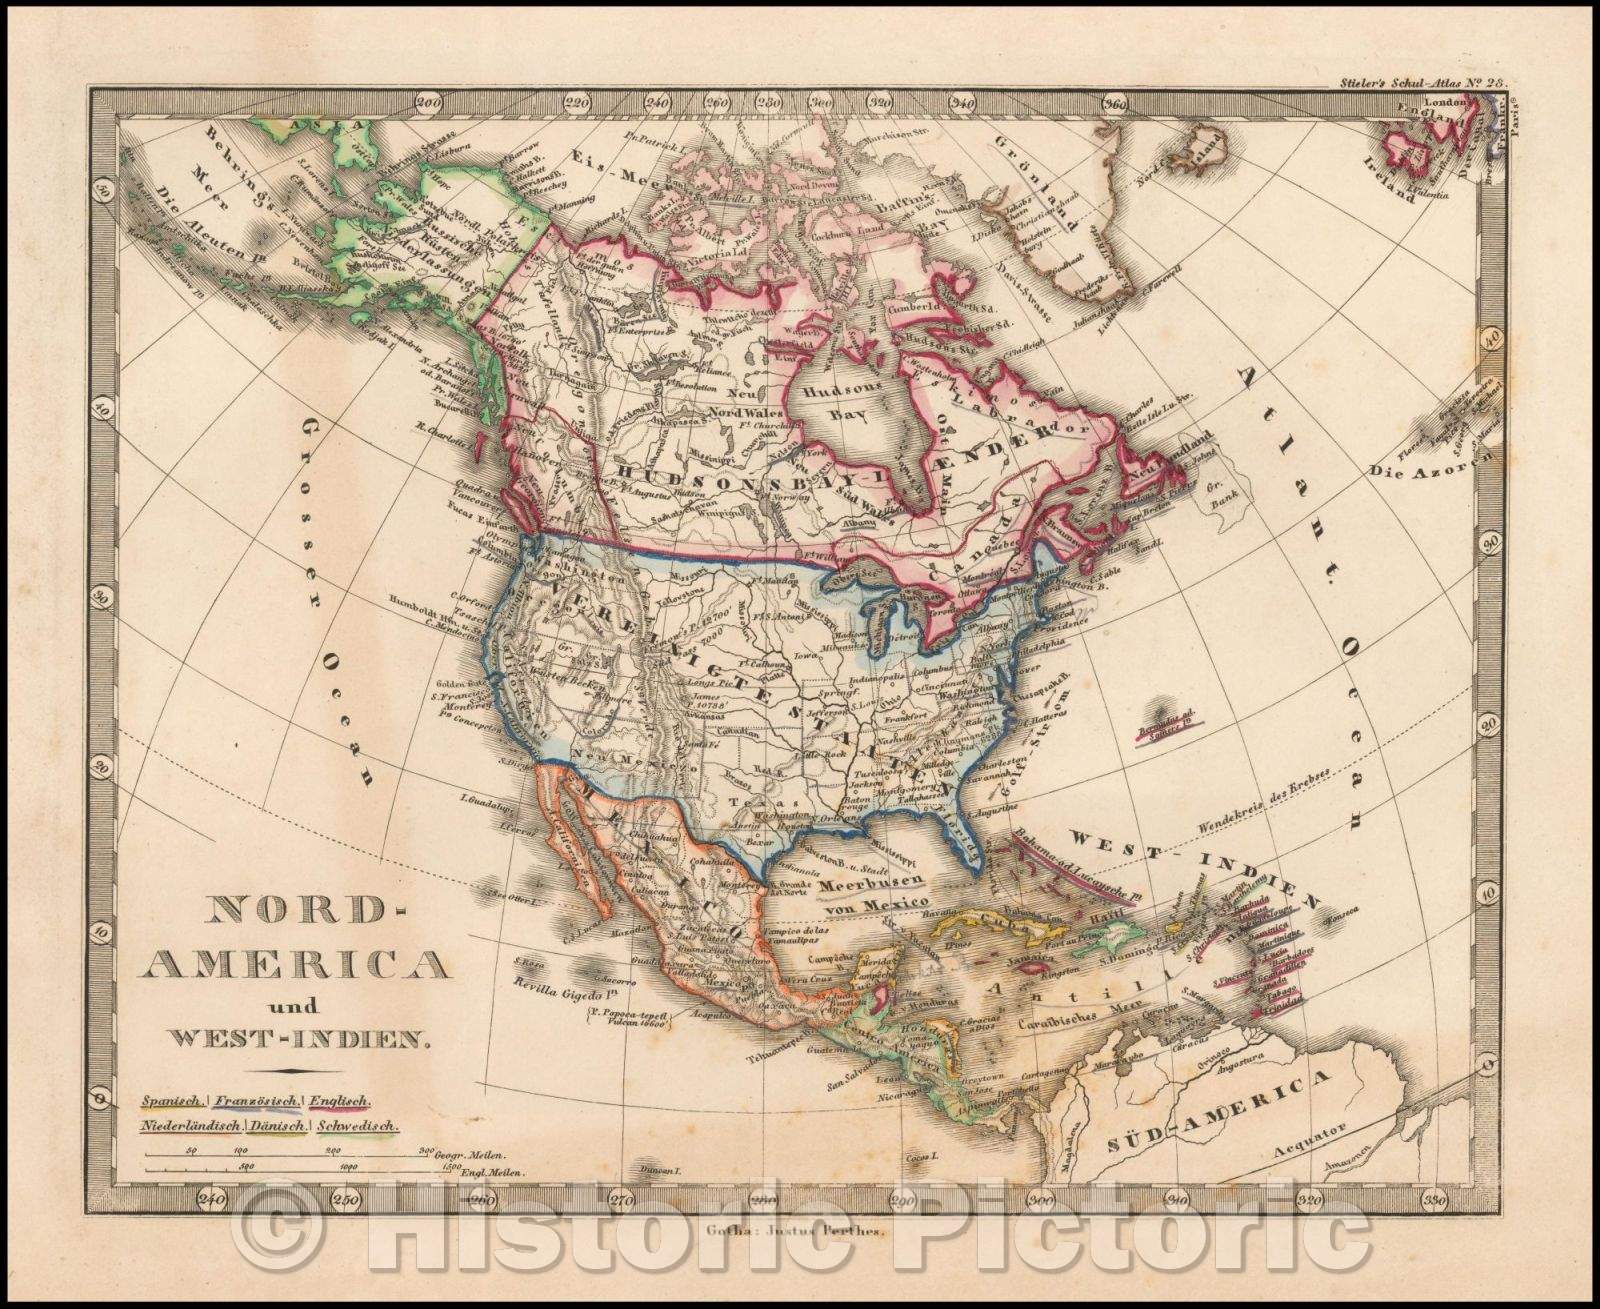 Historic Map - Nord-America und West-Indien/German School Atlas Map of the North America, 1856, Adolf Stieler - Vintage Wall Art